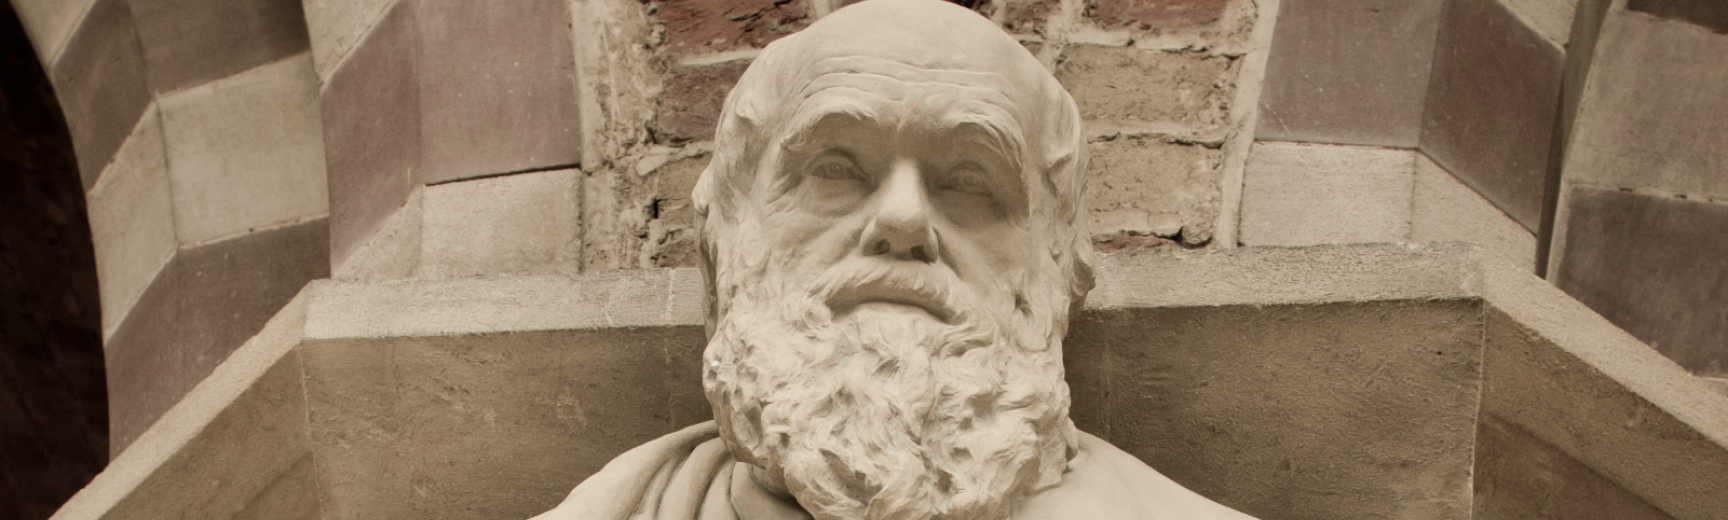 Darwin's statue